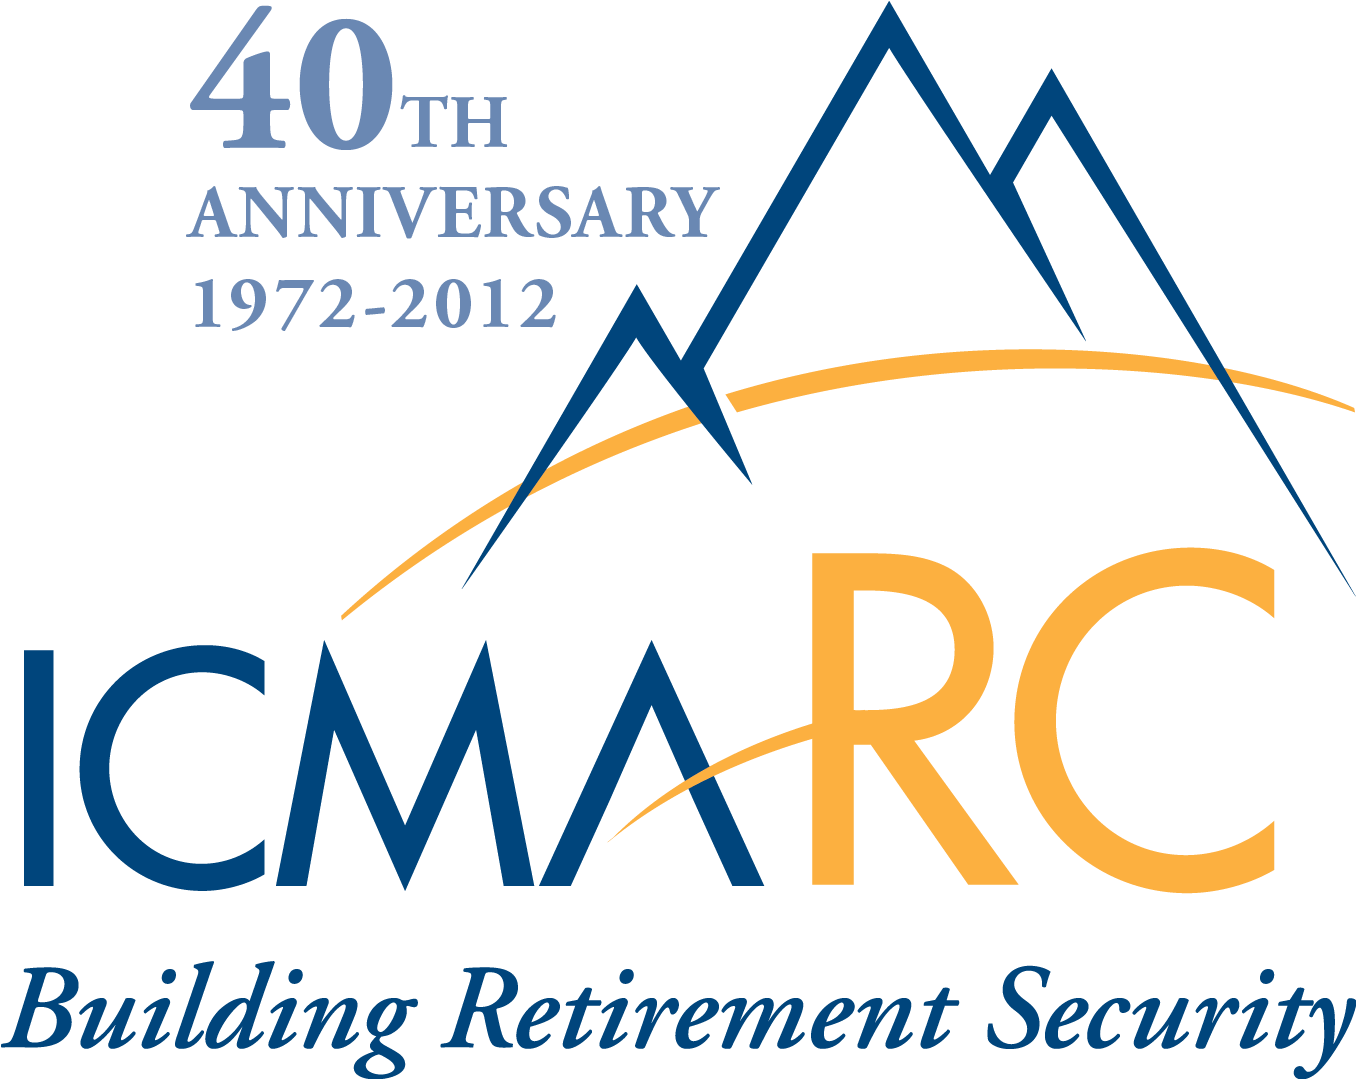 I C M A R C40th Anniversary Logo PNG image